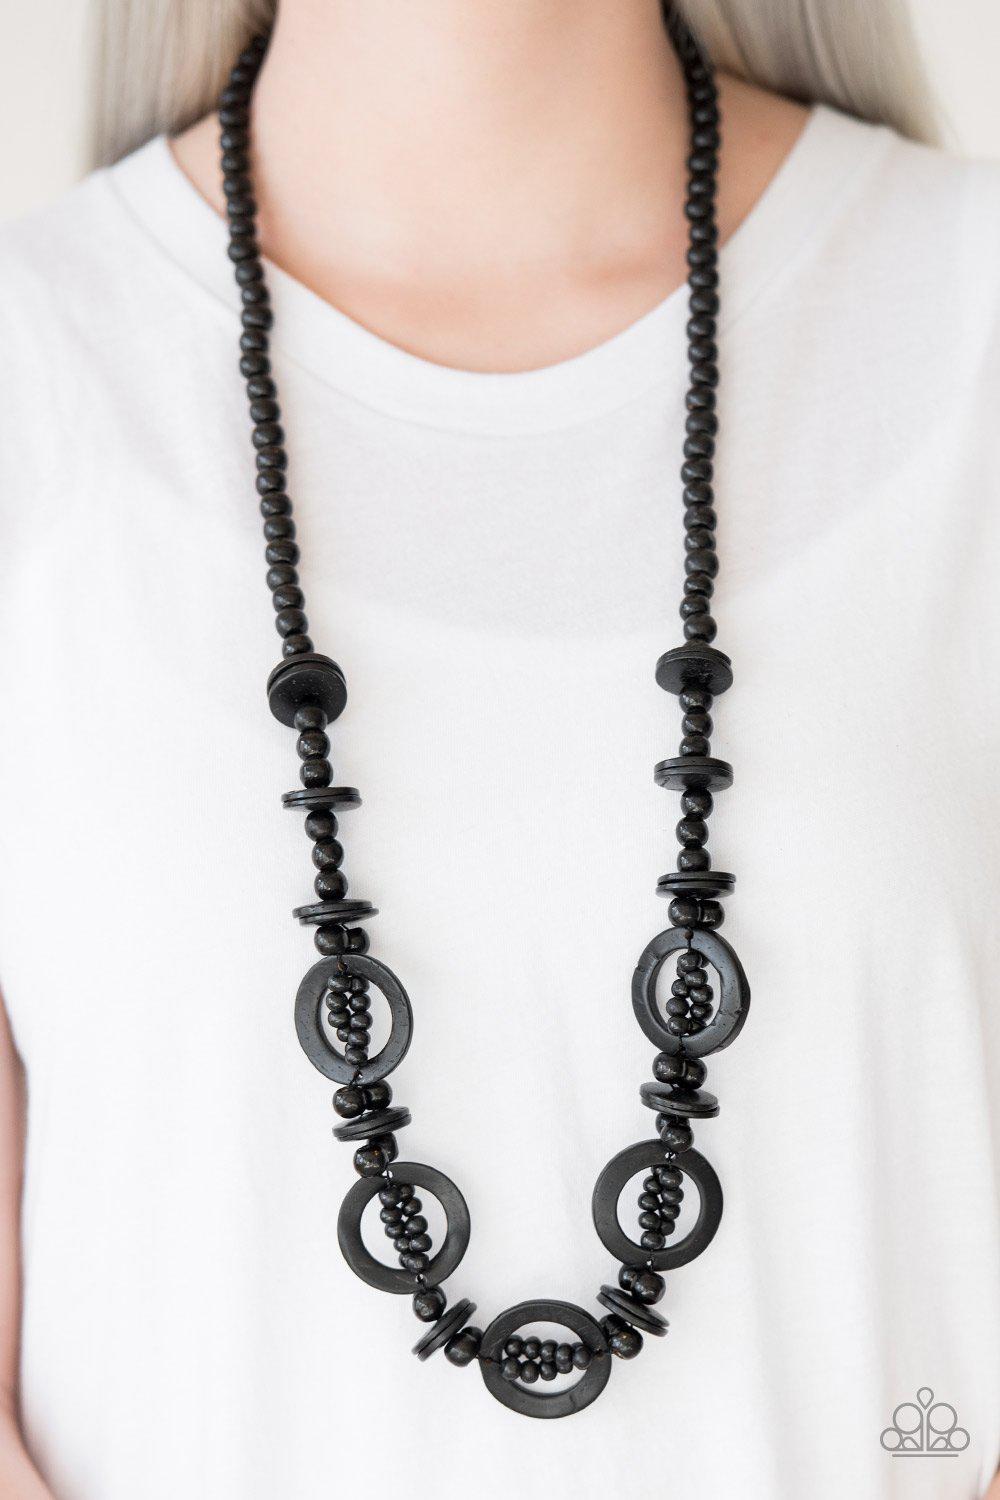 Fiji Foxtrot Black Wood Necklace - Paparazzi Accessories-CarasShop.com - $5 Jewelry by Cara Jewels